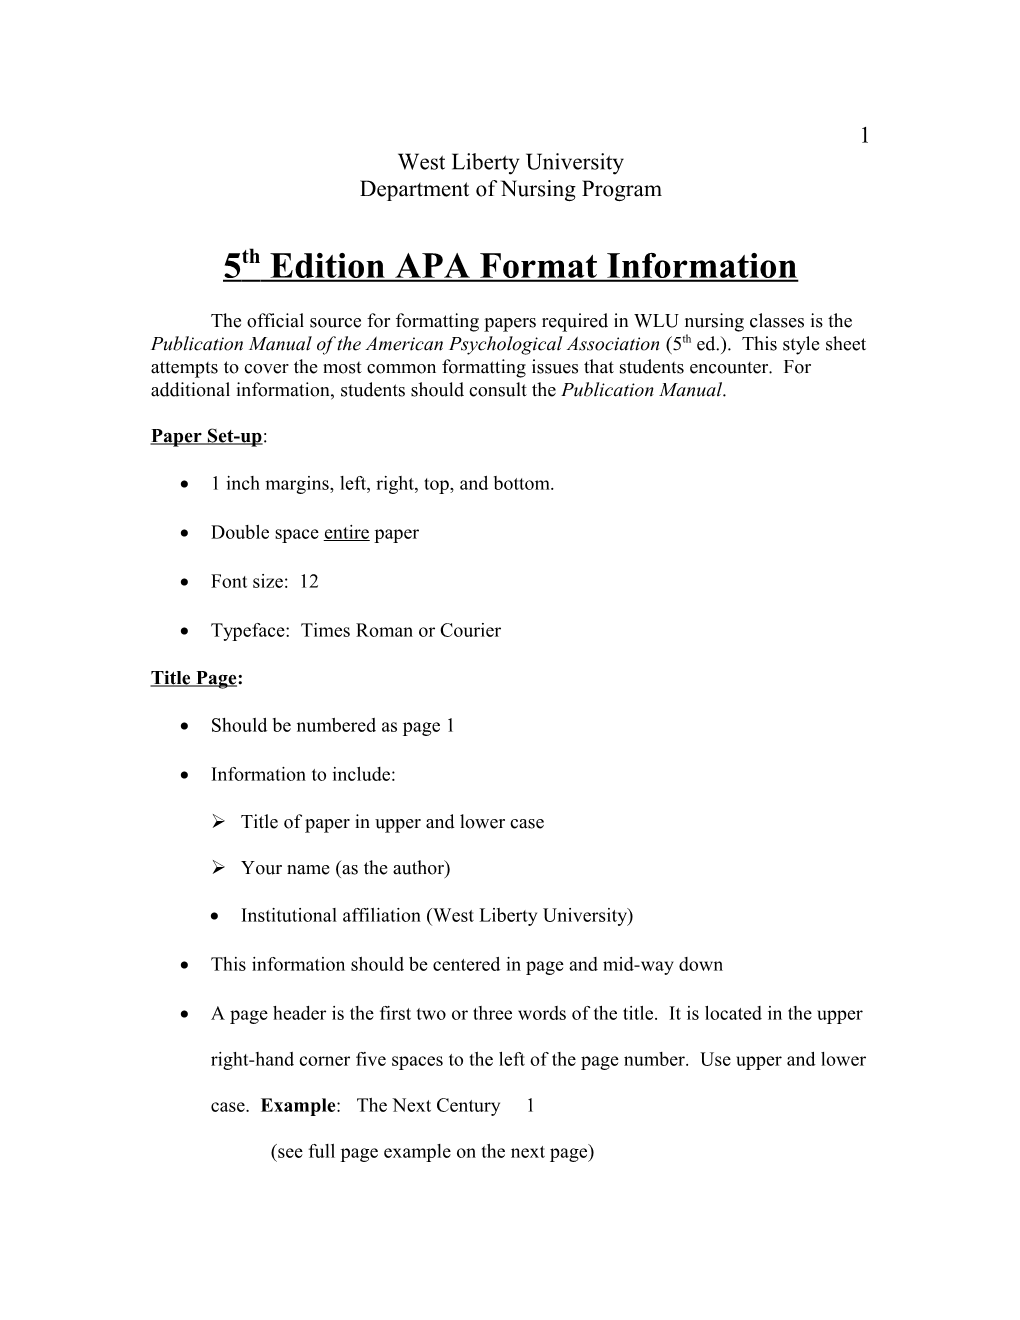 5Th Edition APA Format Information